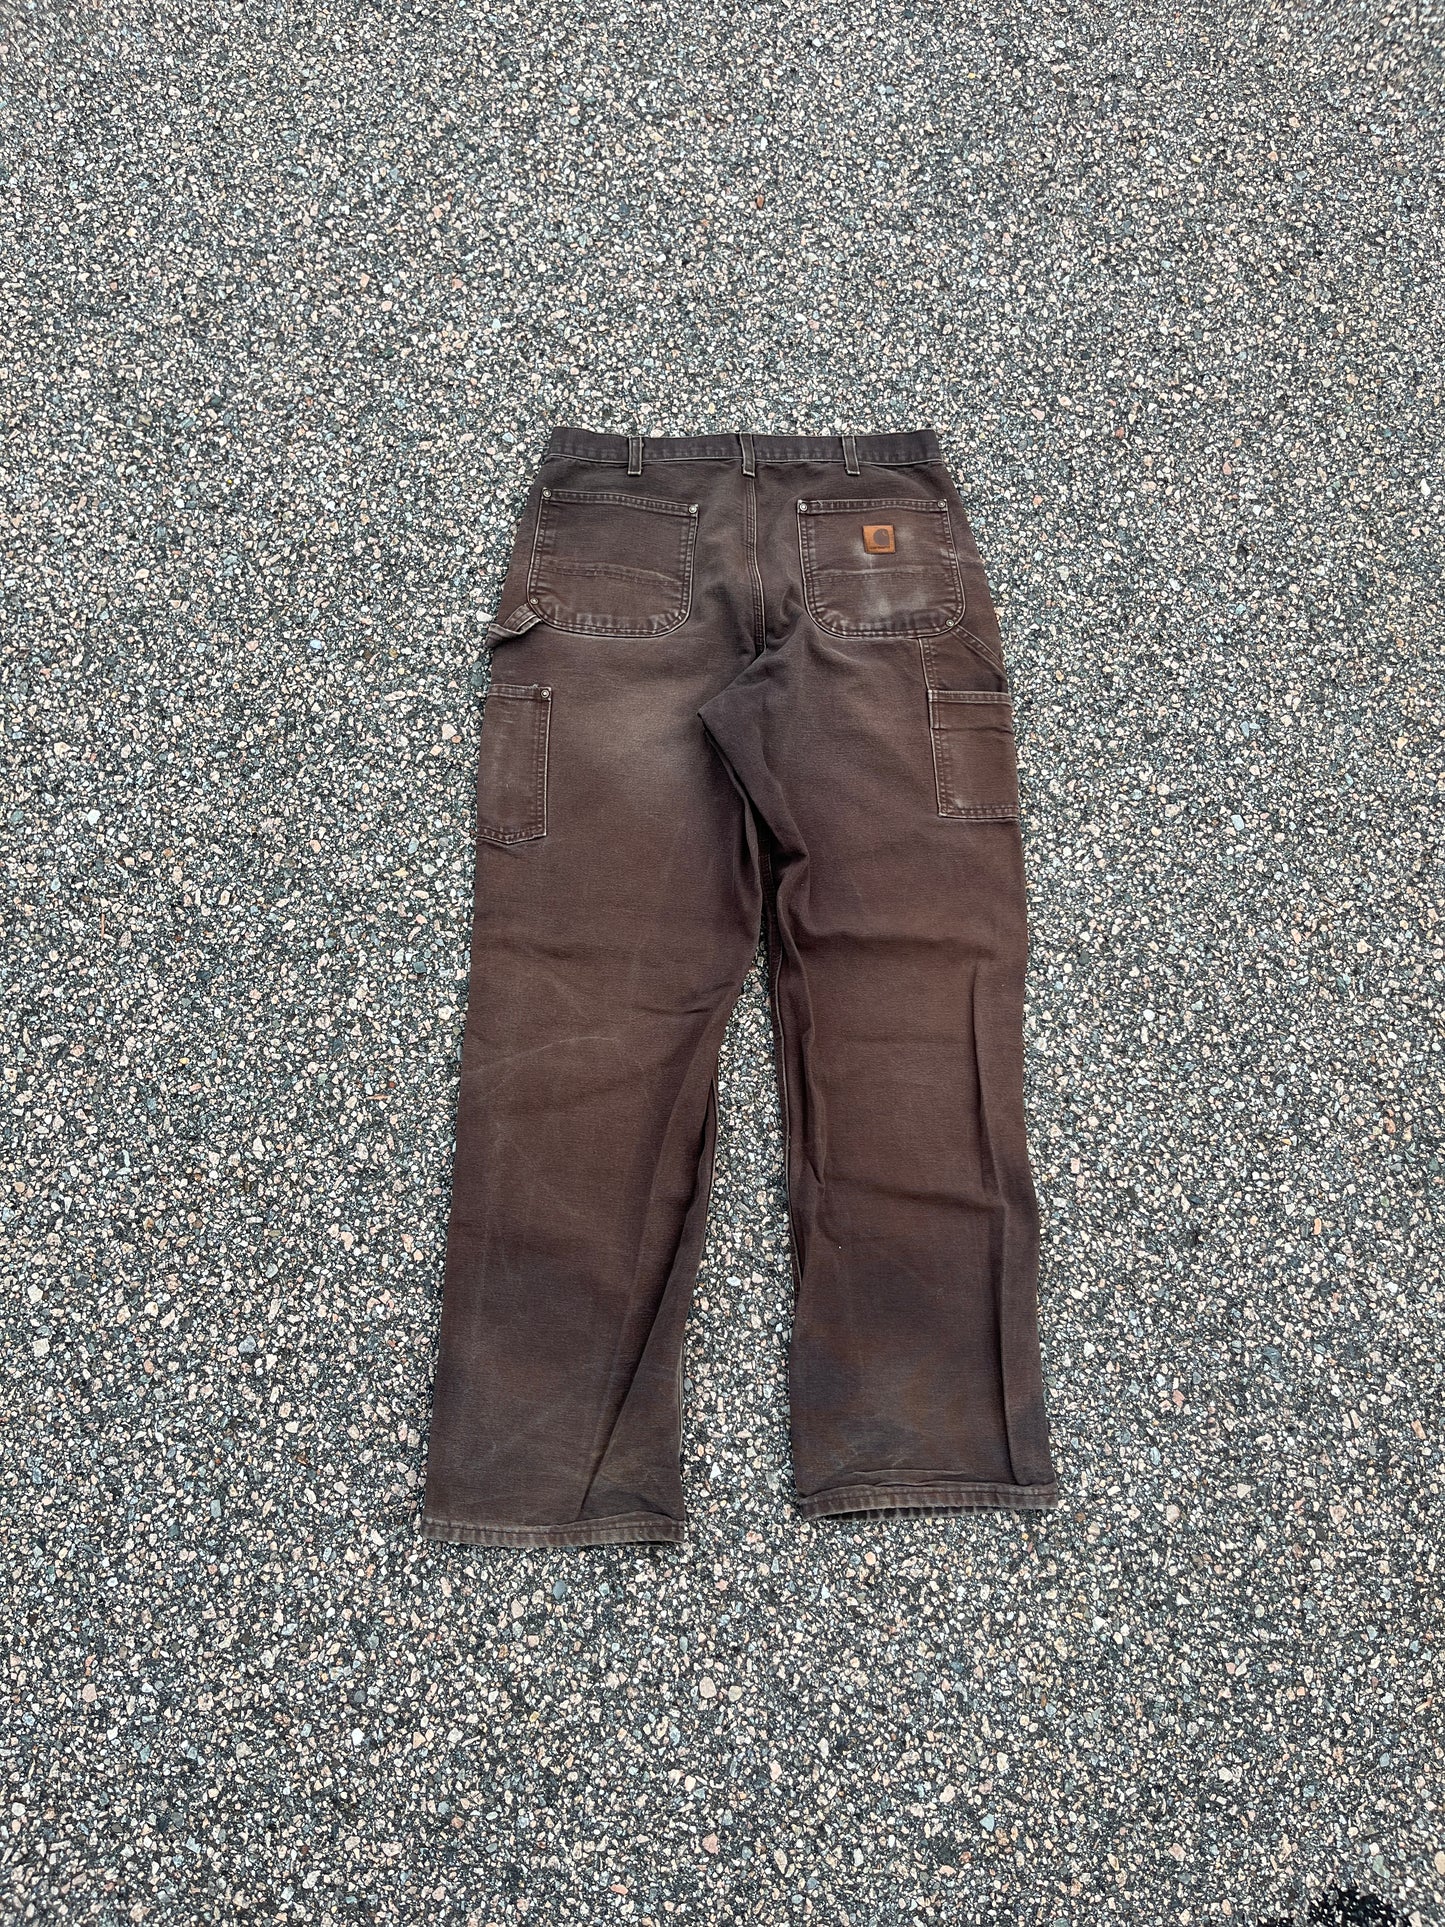 Faded Brown Carhartt Double Knee Pants - 33 x 32